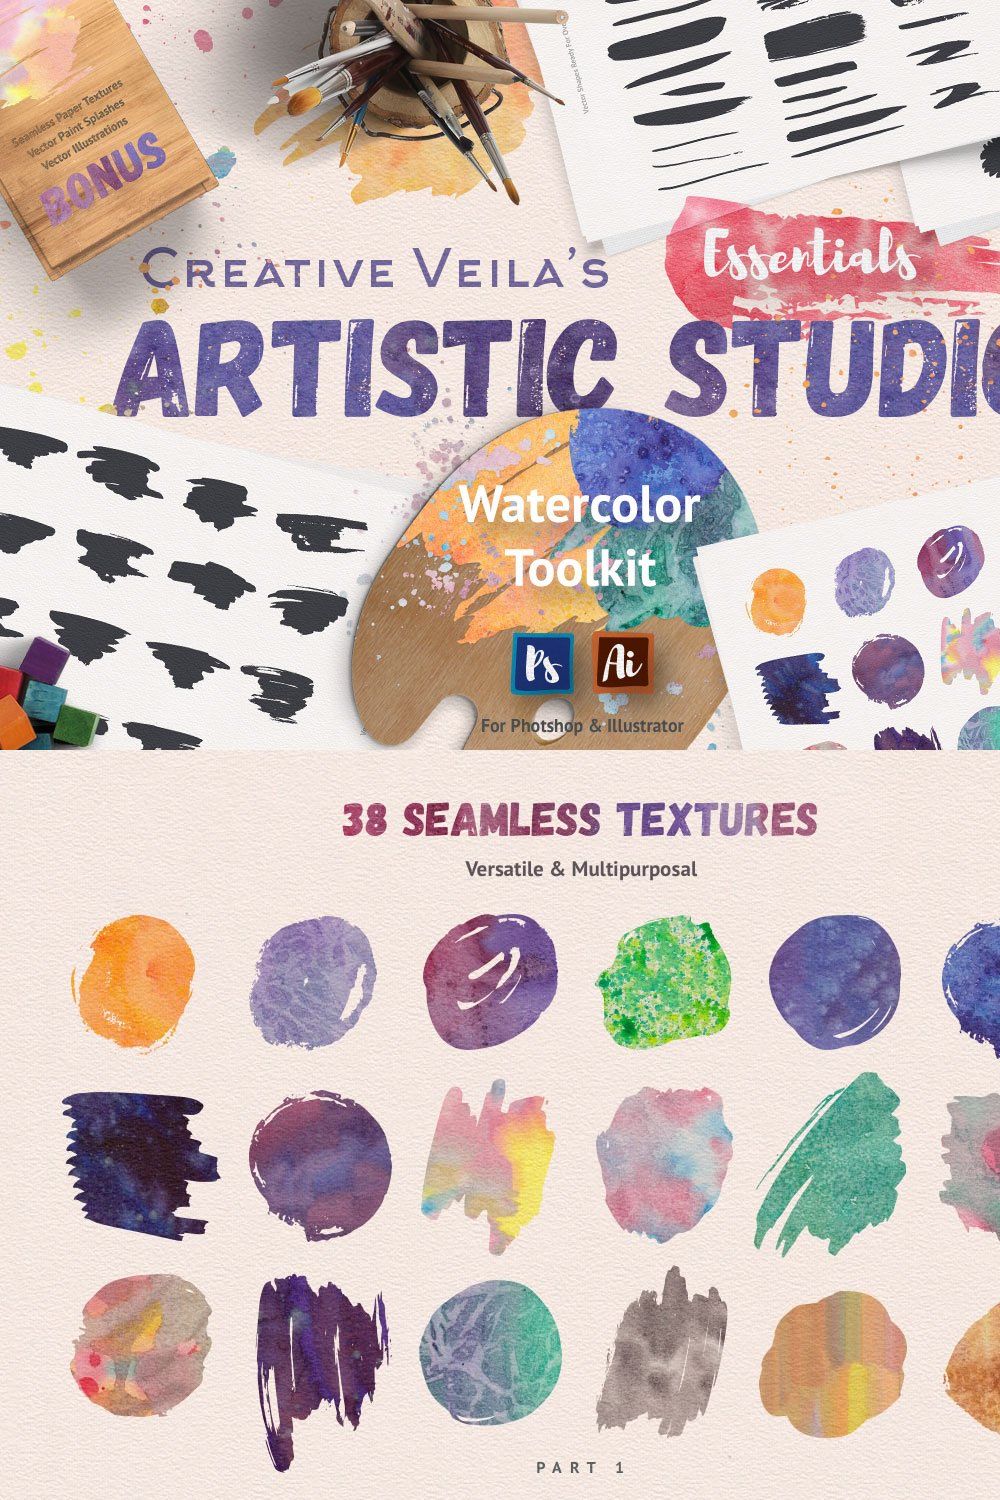 Artistic Studio: Watercolor Toolkit pinterest preview image.